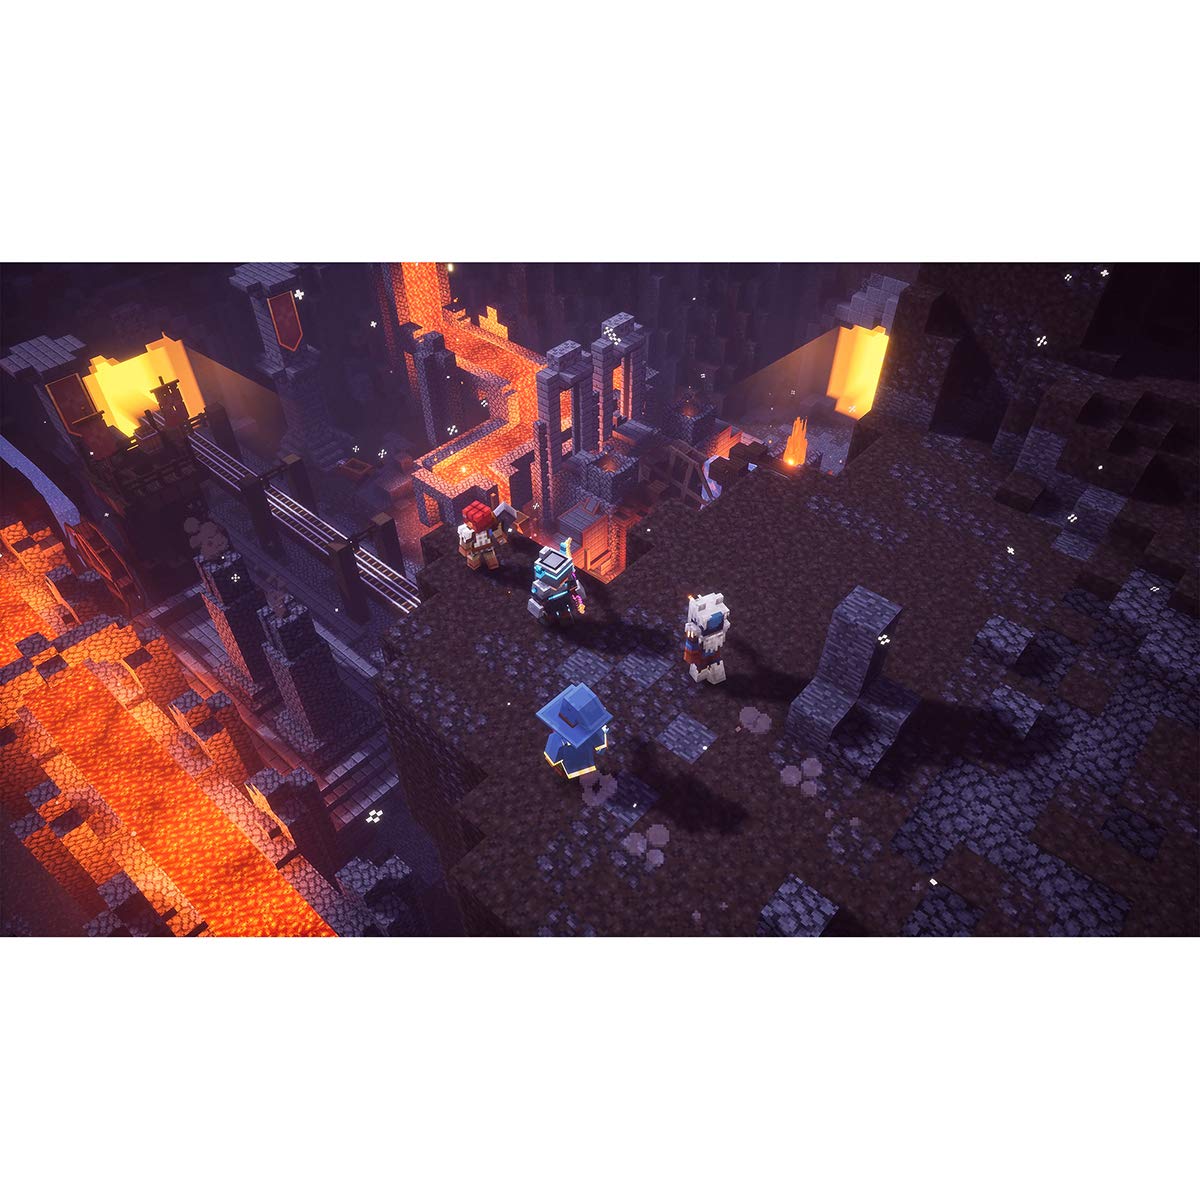 Minecraft Dungeons: Hero Edition – Xbox Series X & Xbox One (7865512984814)